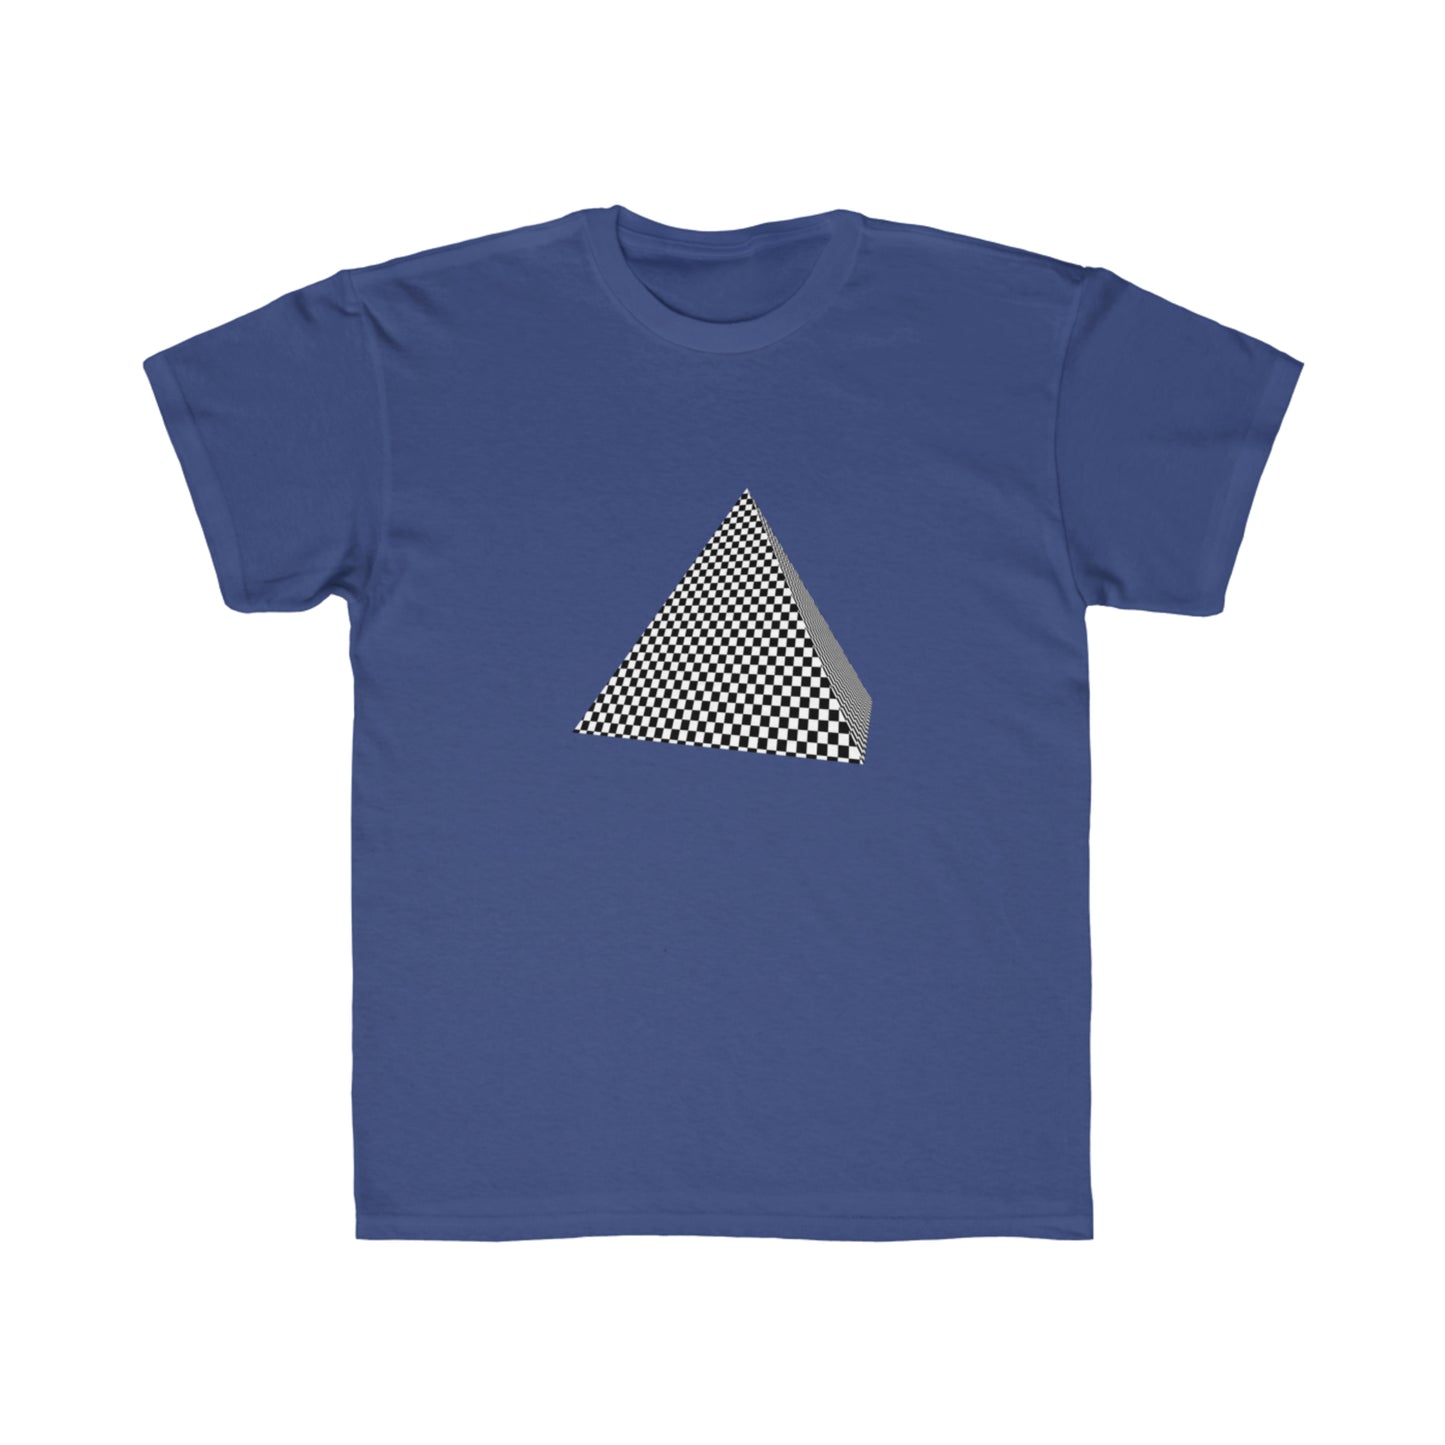 Floor Pyramid Kids T-Shirt